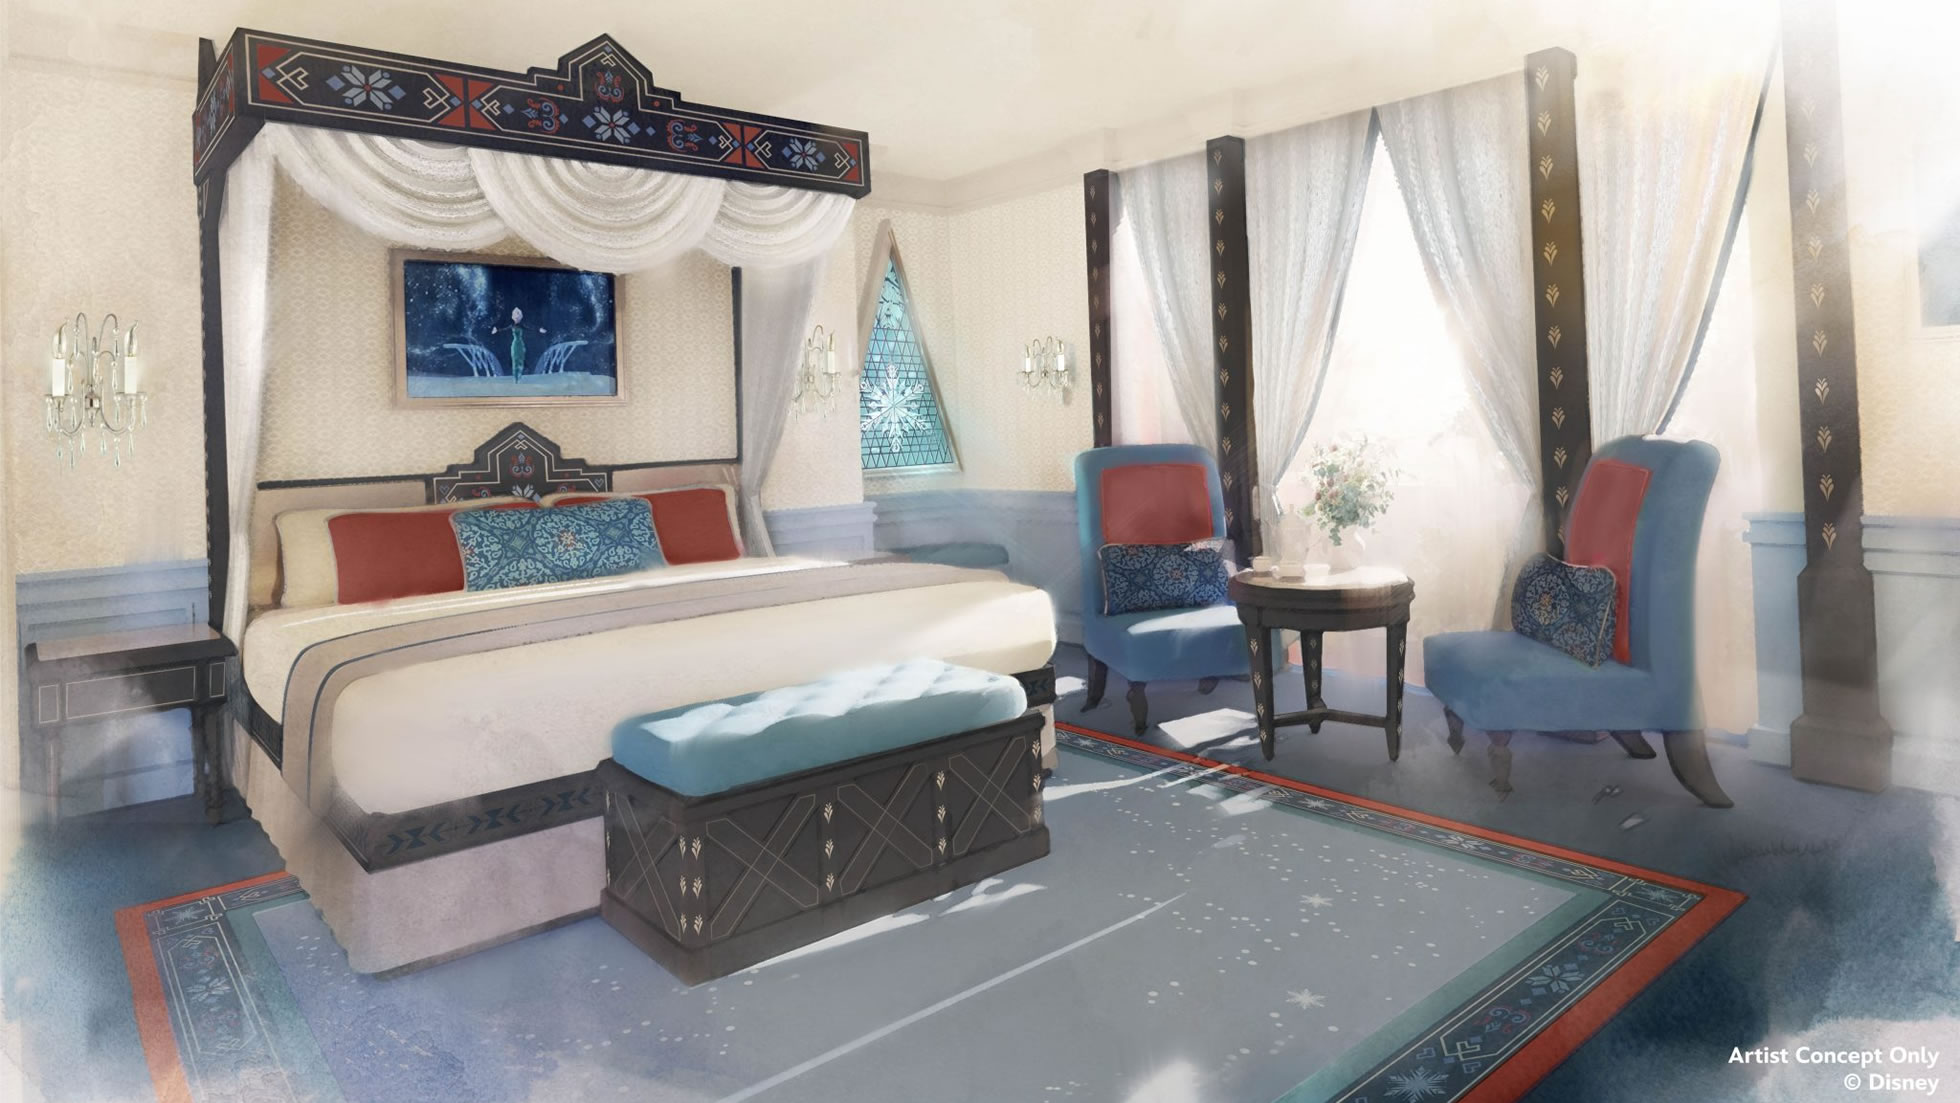 Nuova suite a tema Frozen del Disneyland Hotel